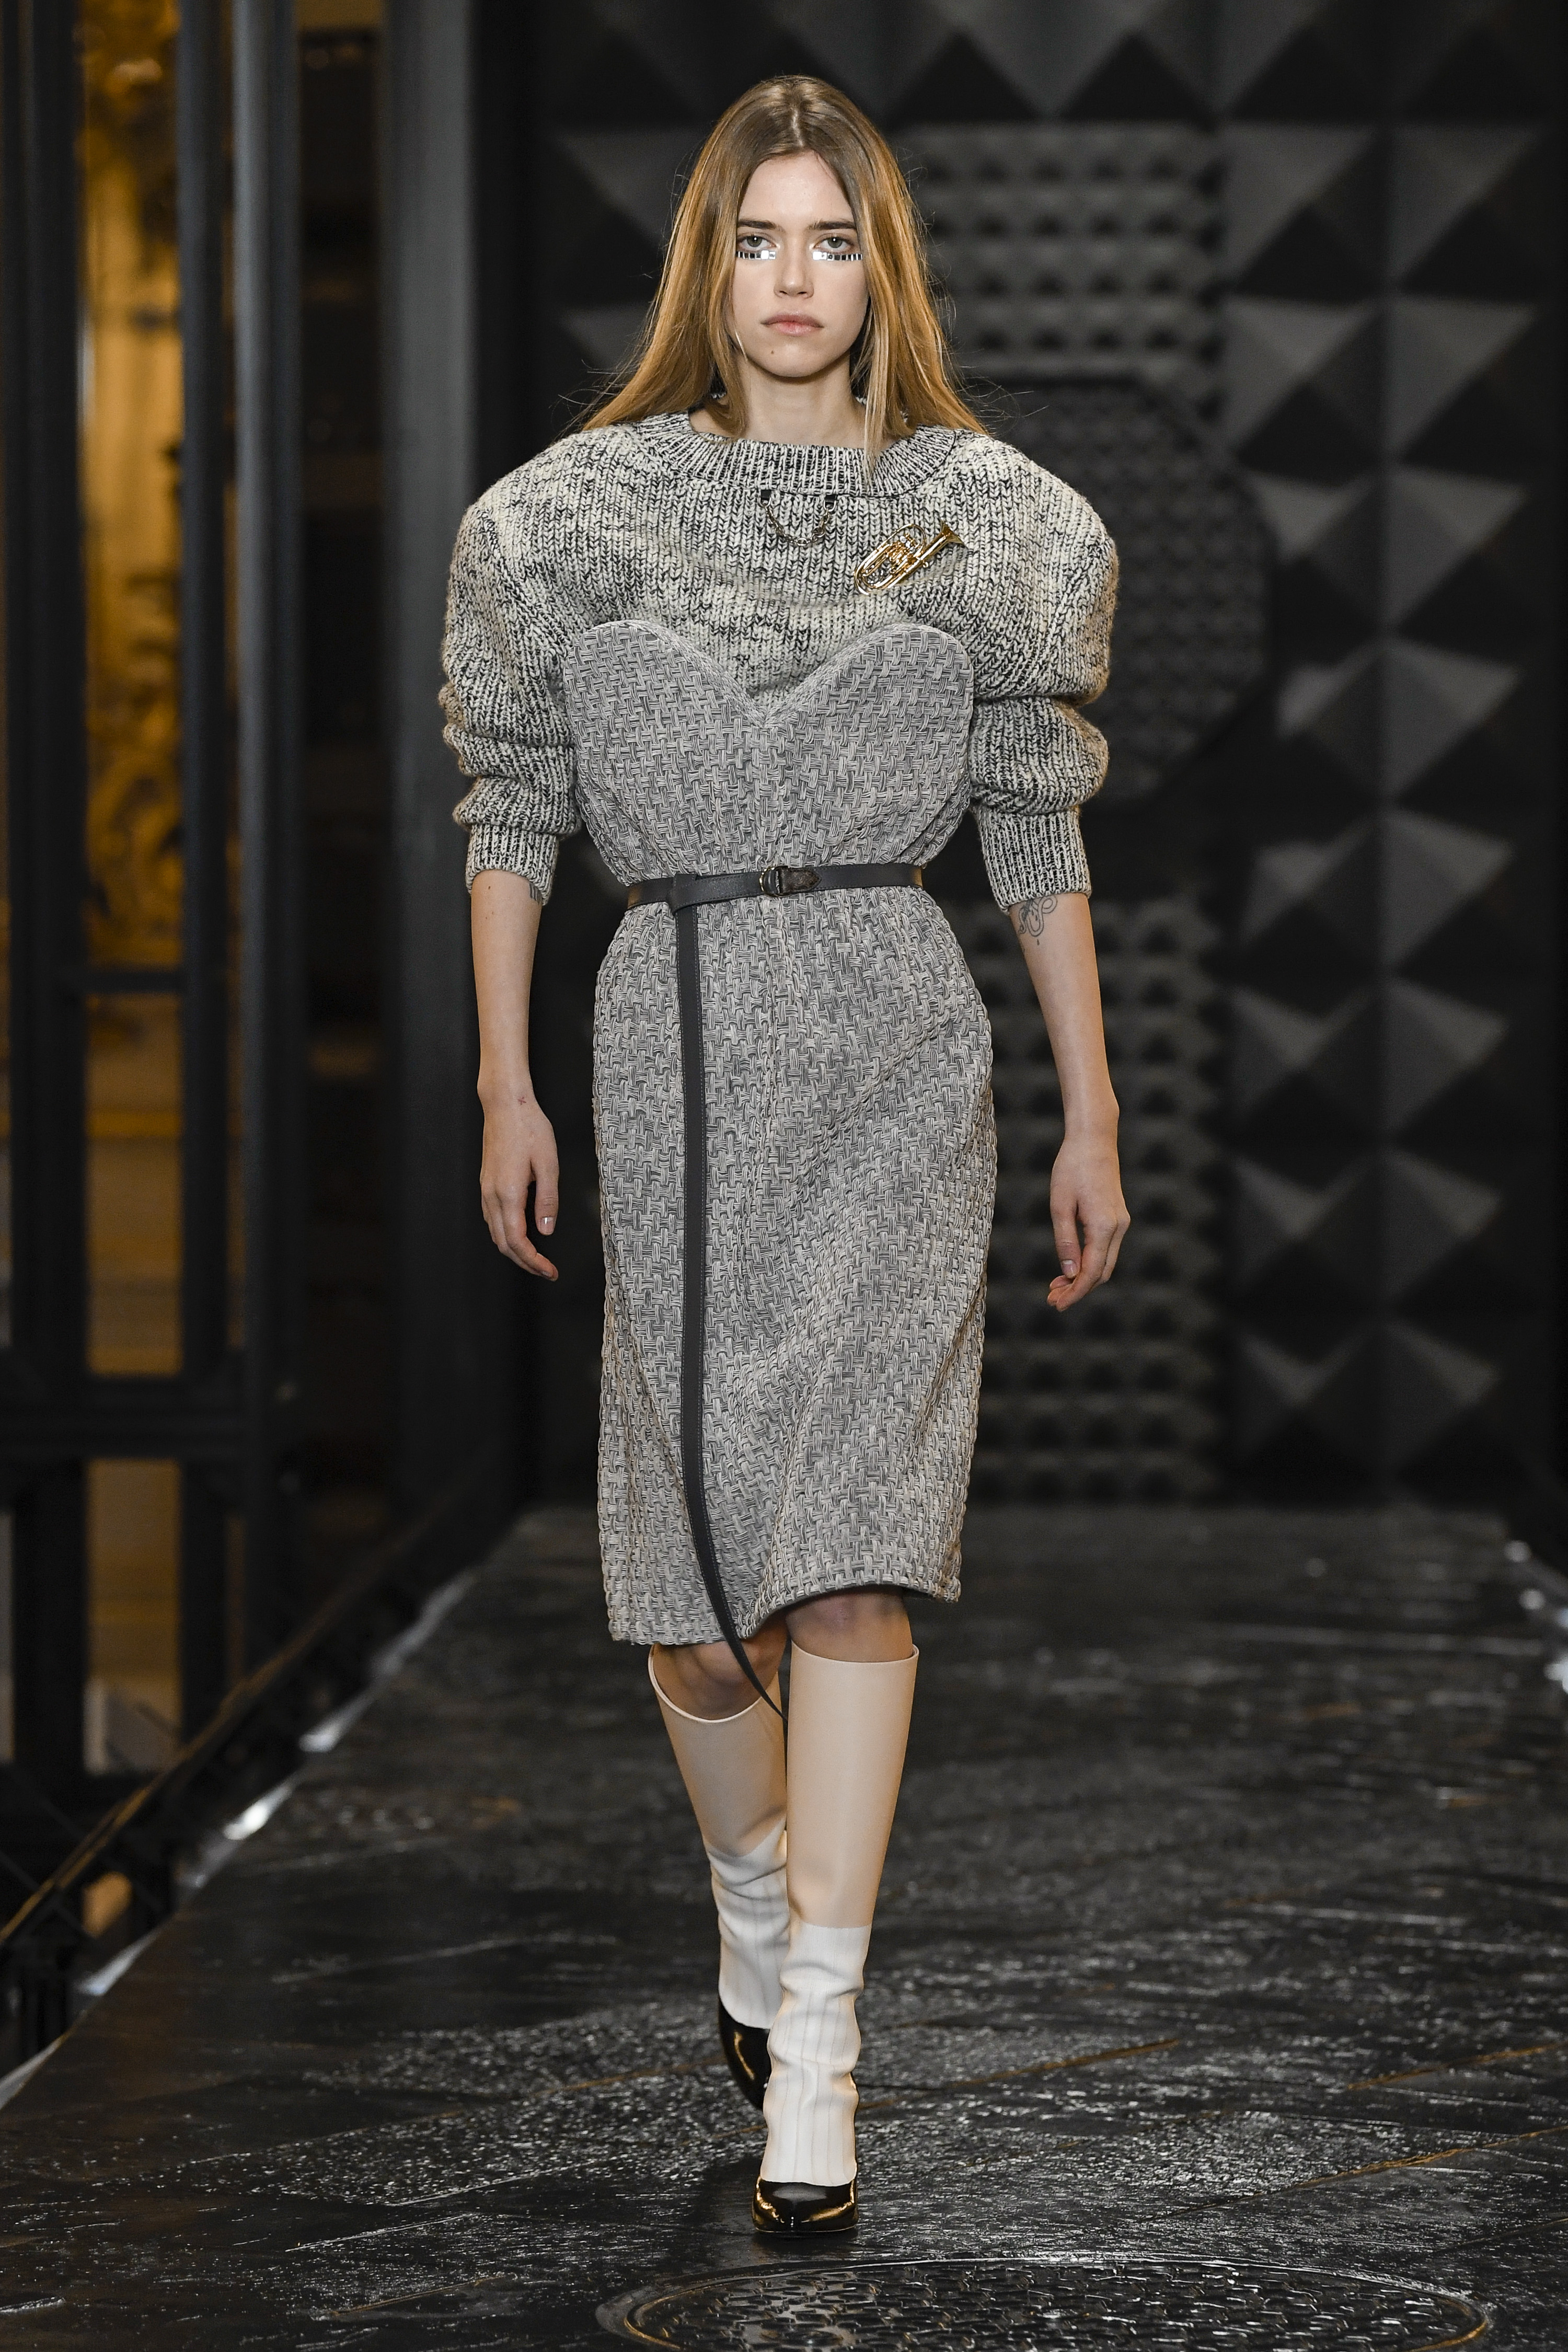 Rosalia performs in Louis Vuitton catwalk show at Paris Fashion Week